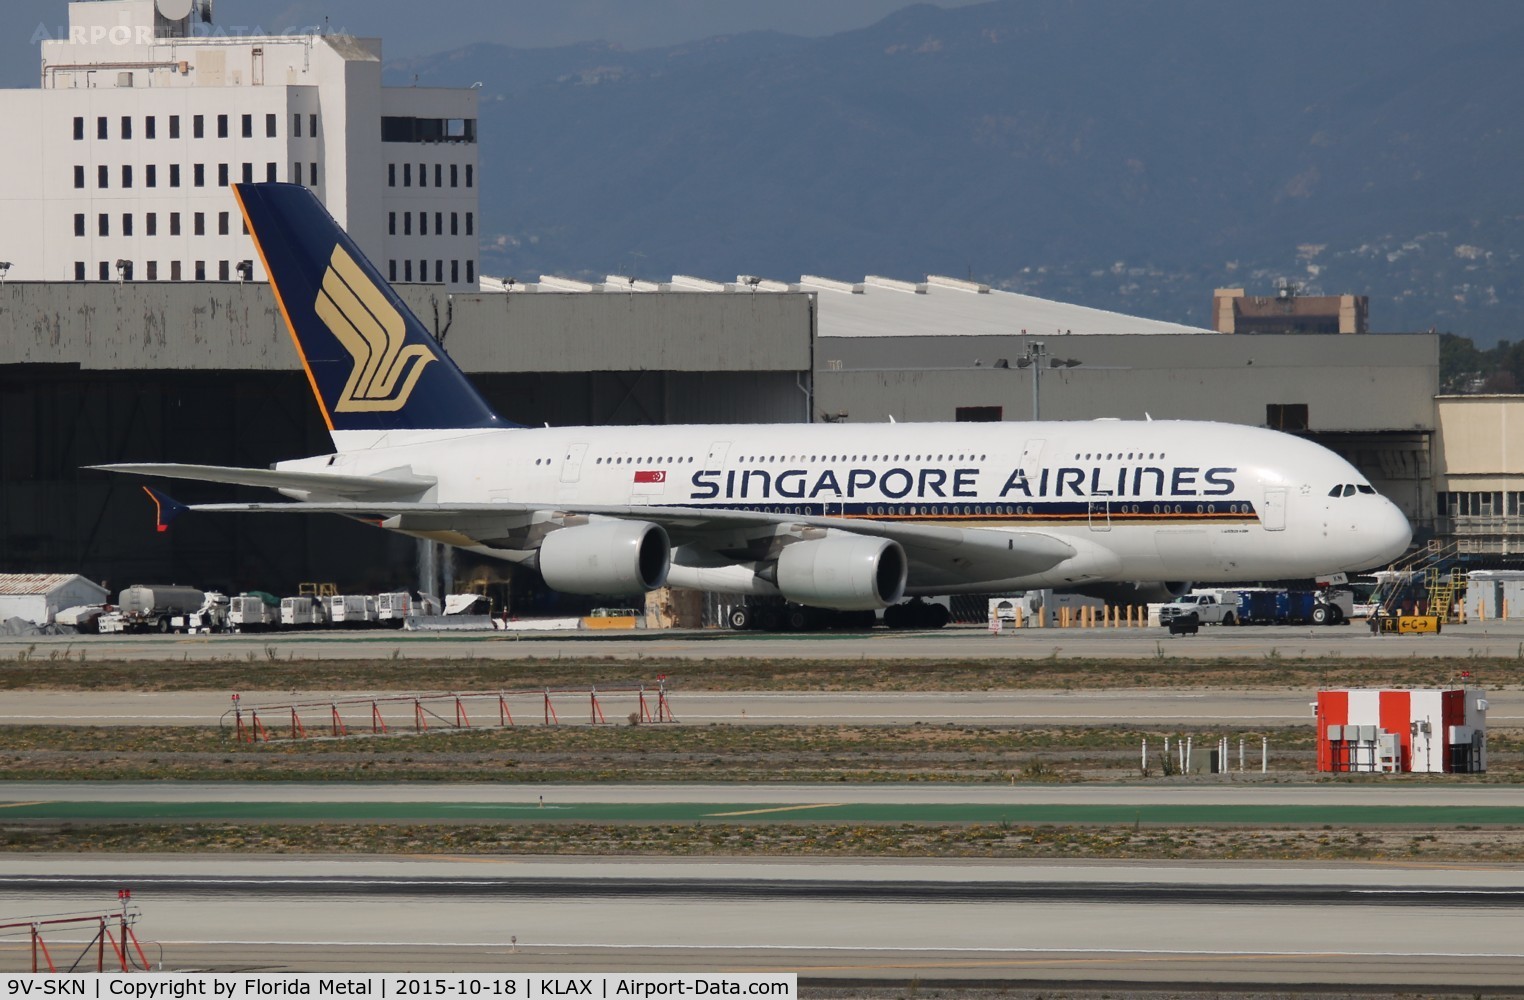 9V-SKN, 2011 Airbus A380-841 C/N 071, Singapore